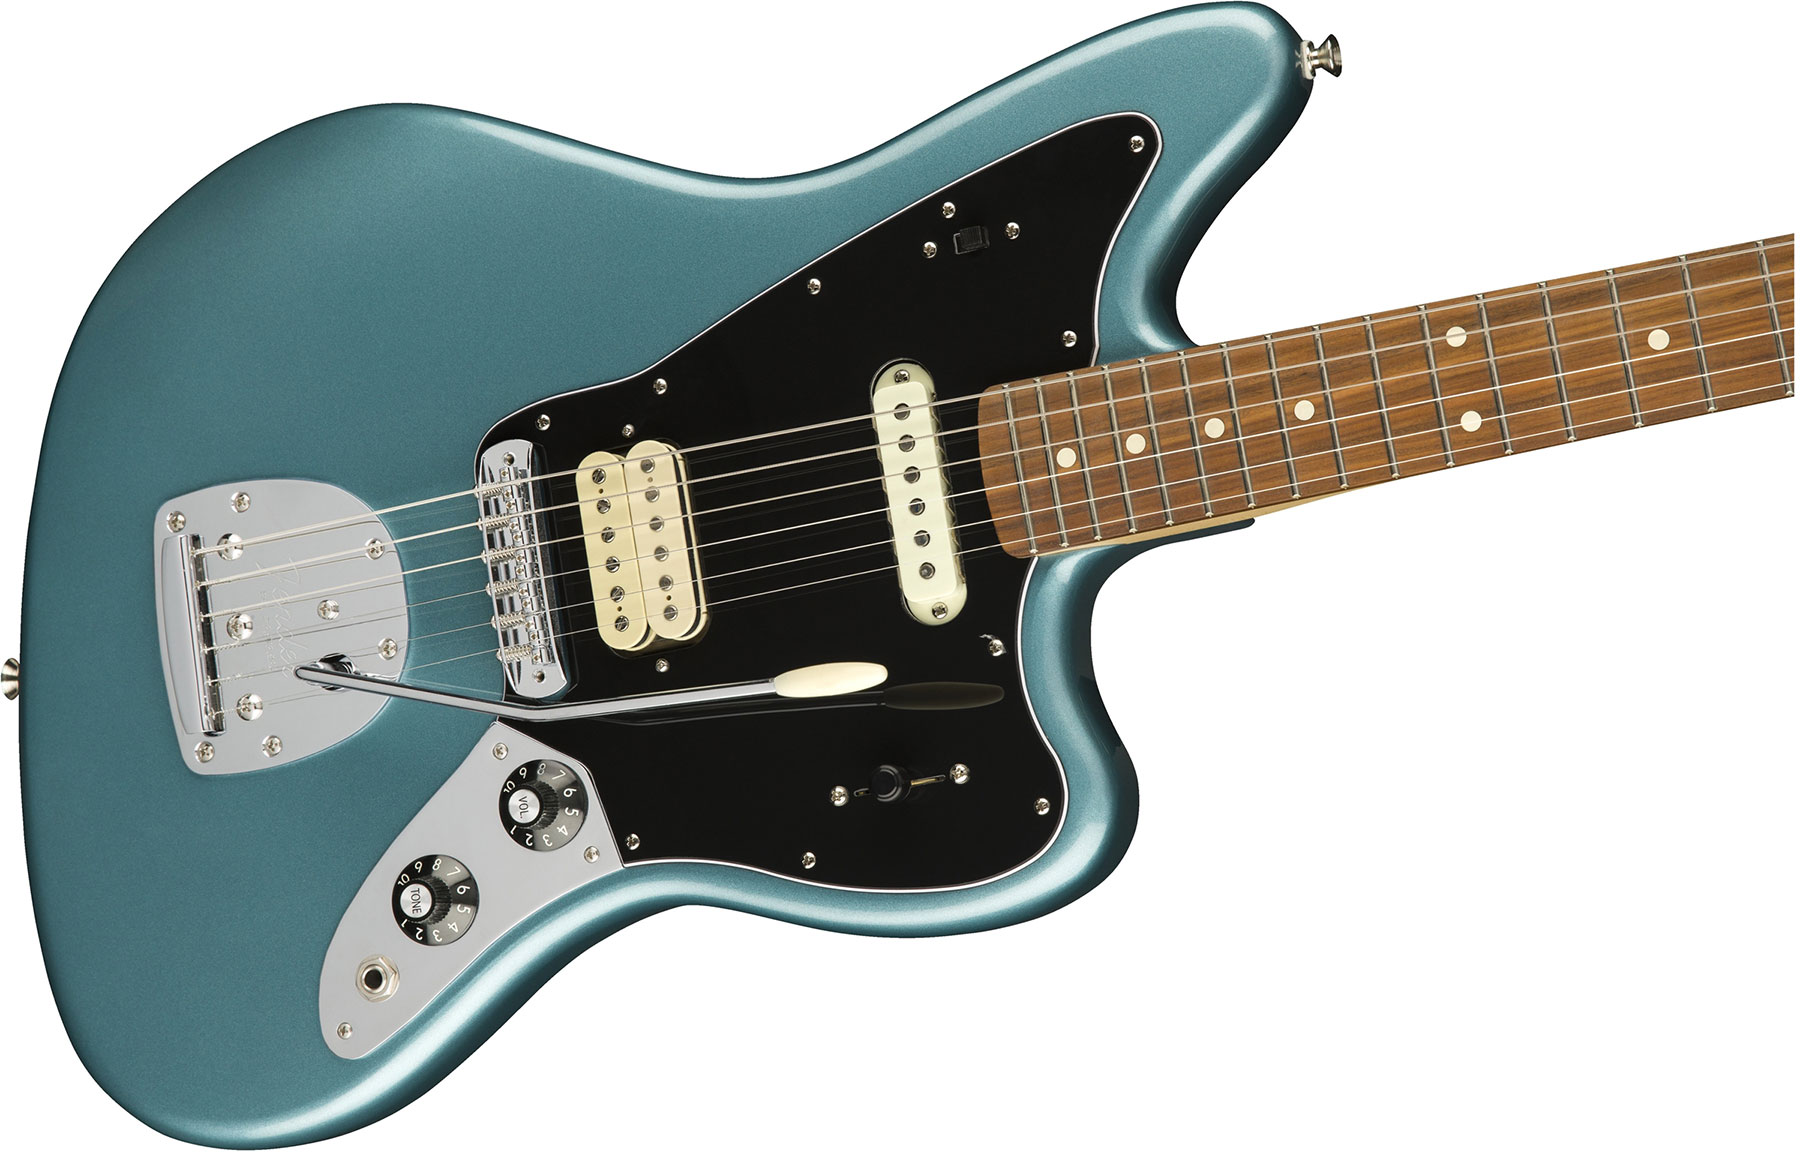 Fender Jaguar Player Mex Hs Trem Pf - Tidepool - Retro rock electric guitar - Variation 2